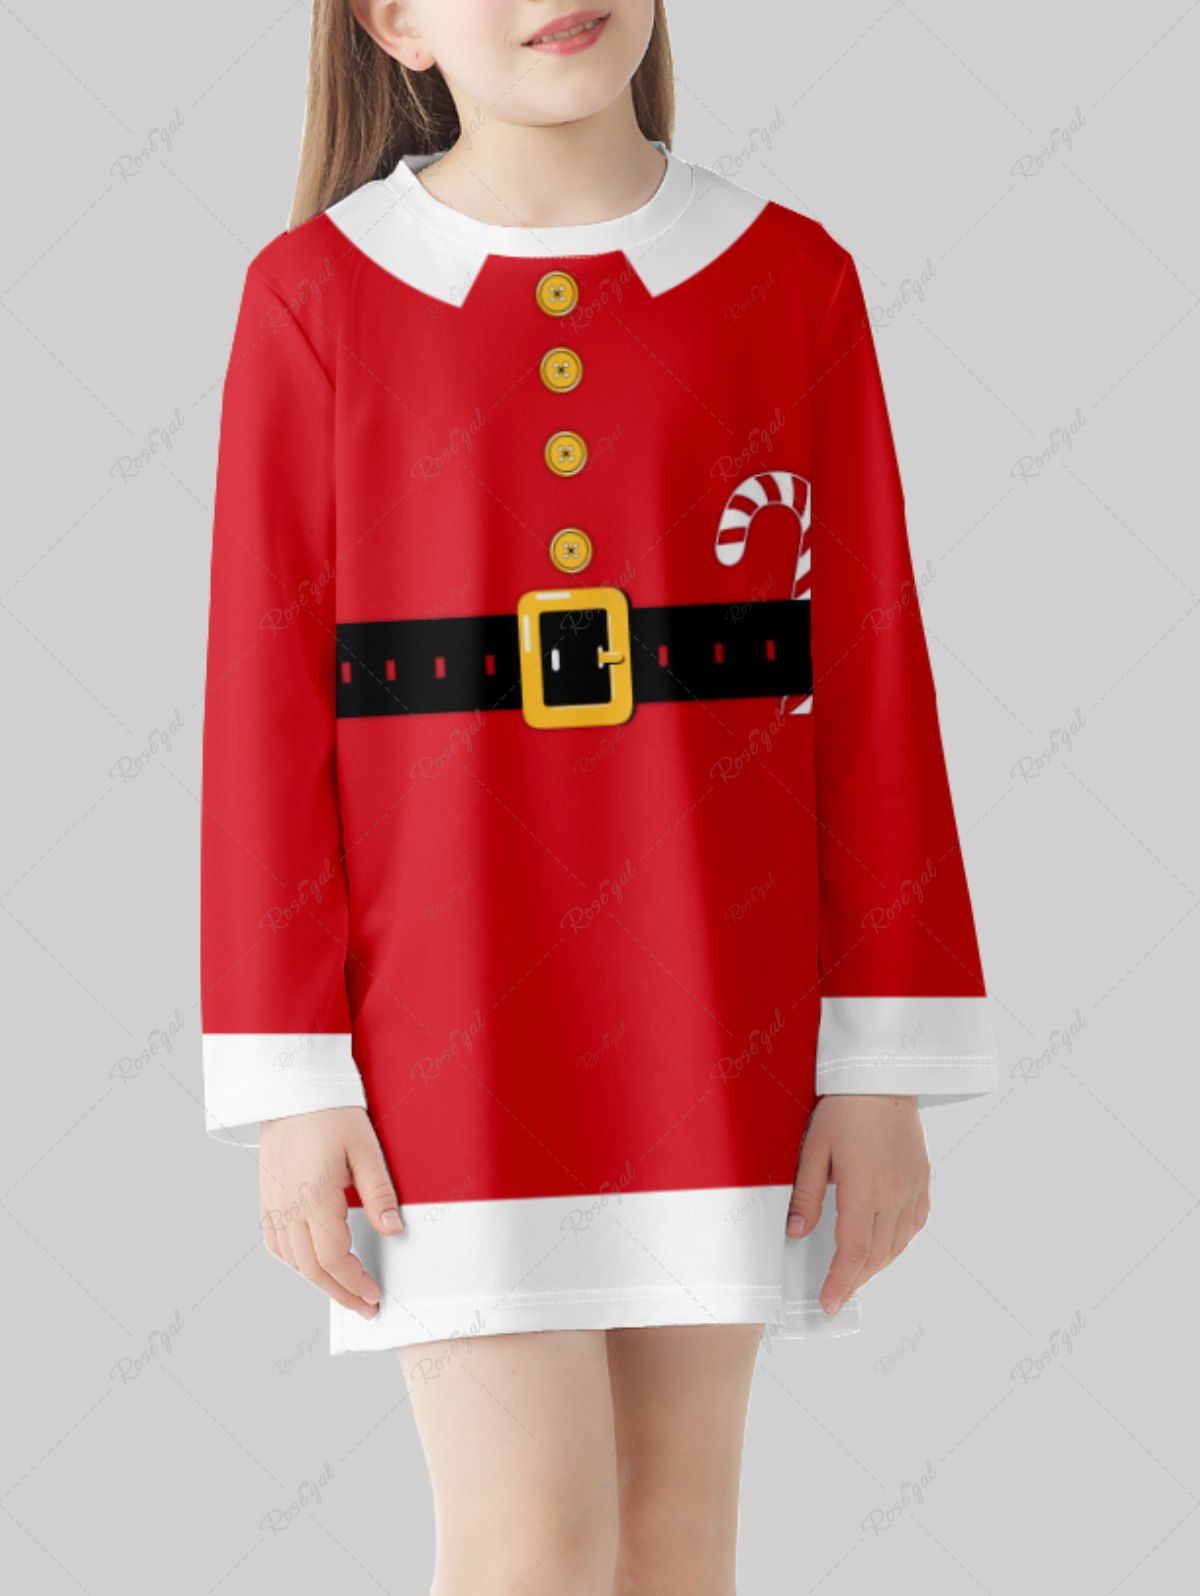 Chic Kids Christmas 3D Printed Long Sleeve Tee Dress  